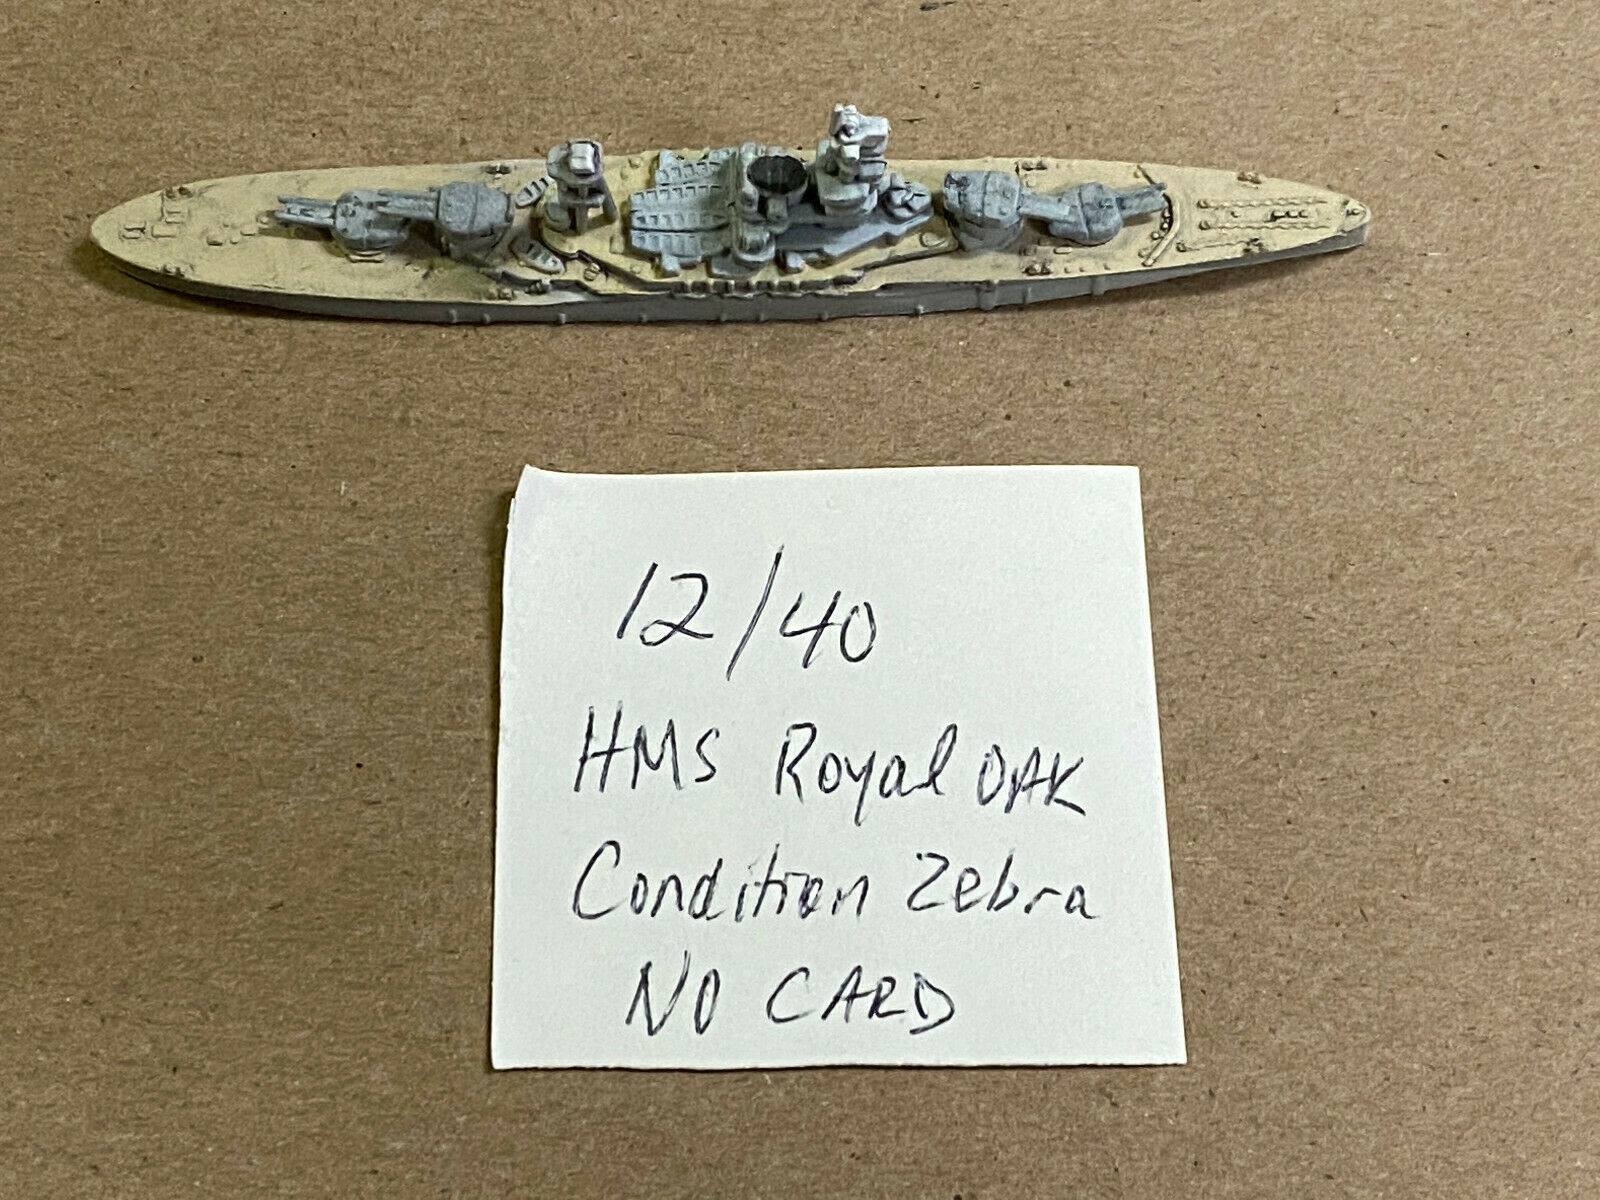 Hms Royal Oak 12/40 - War At Sea Condition Zebra - No Stat Card